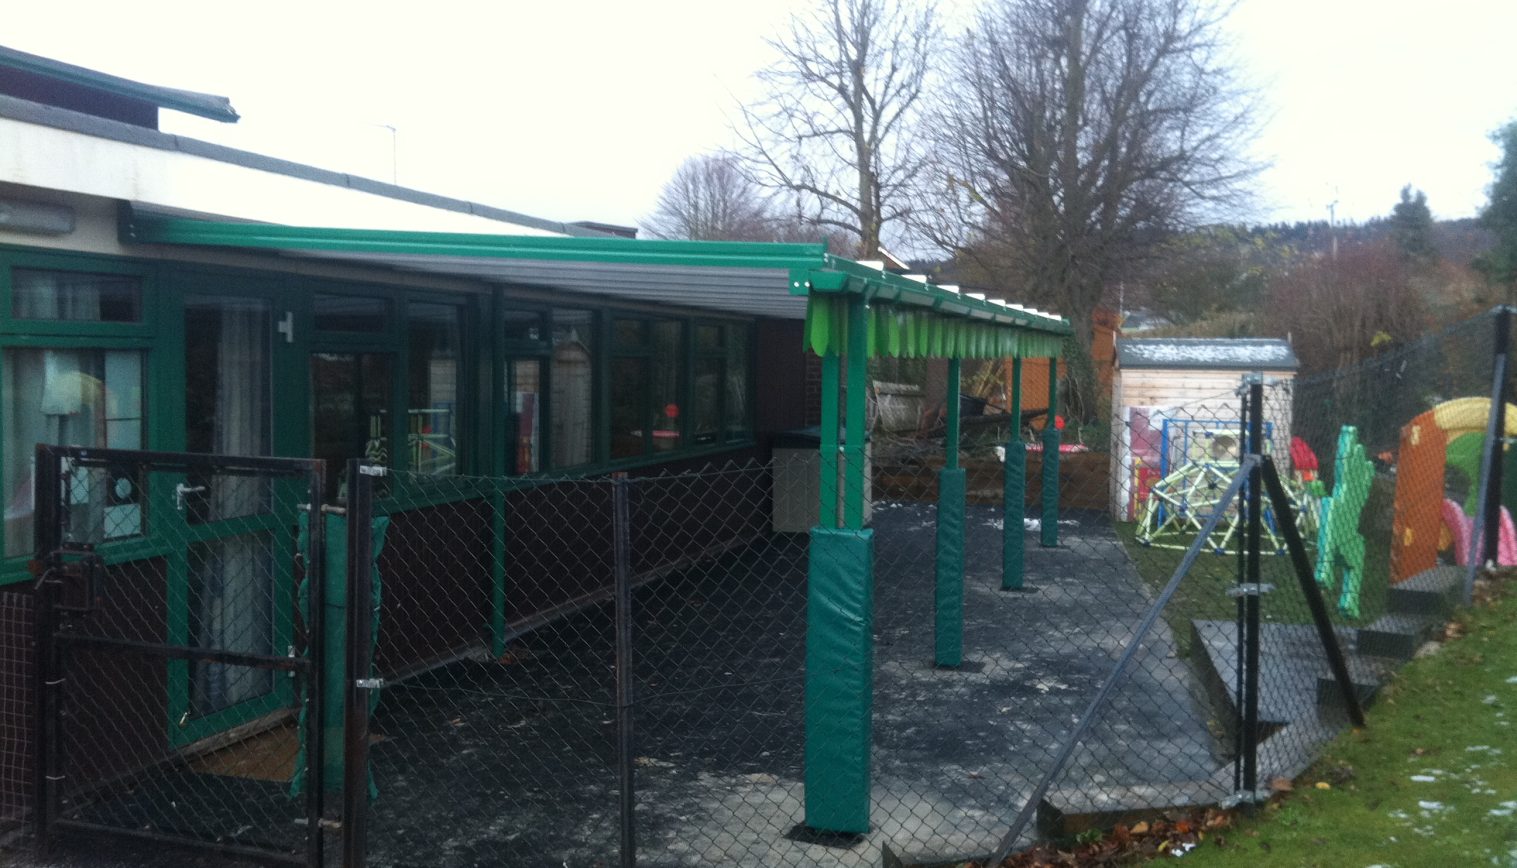 Wendover Pre-School – Wall Mounted Canopy